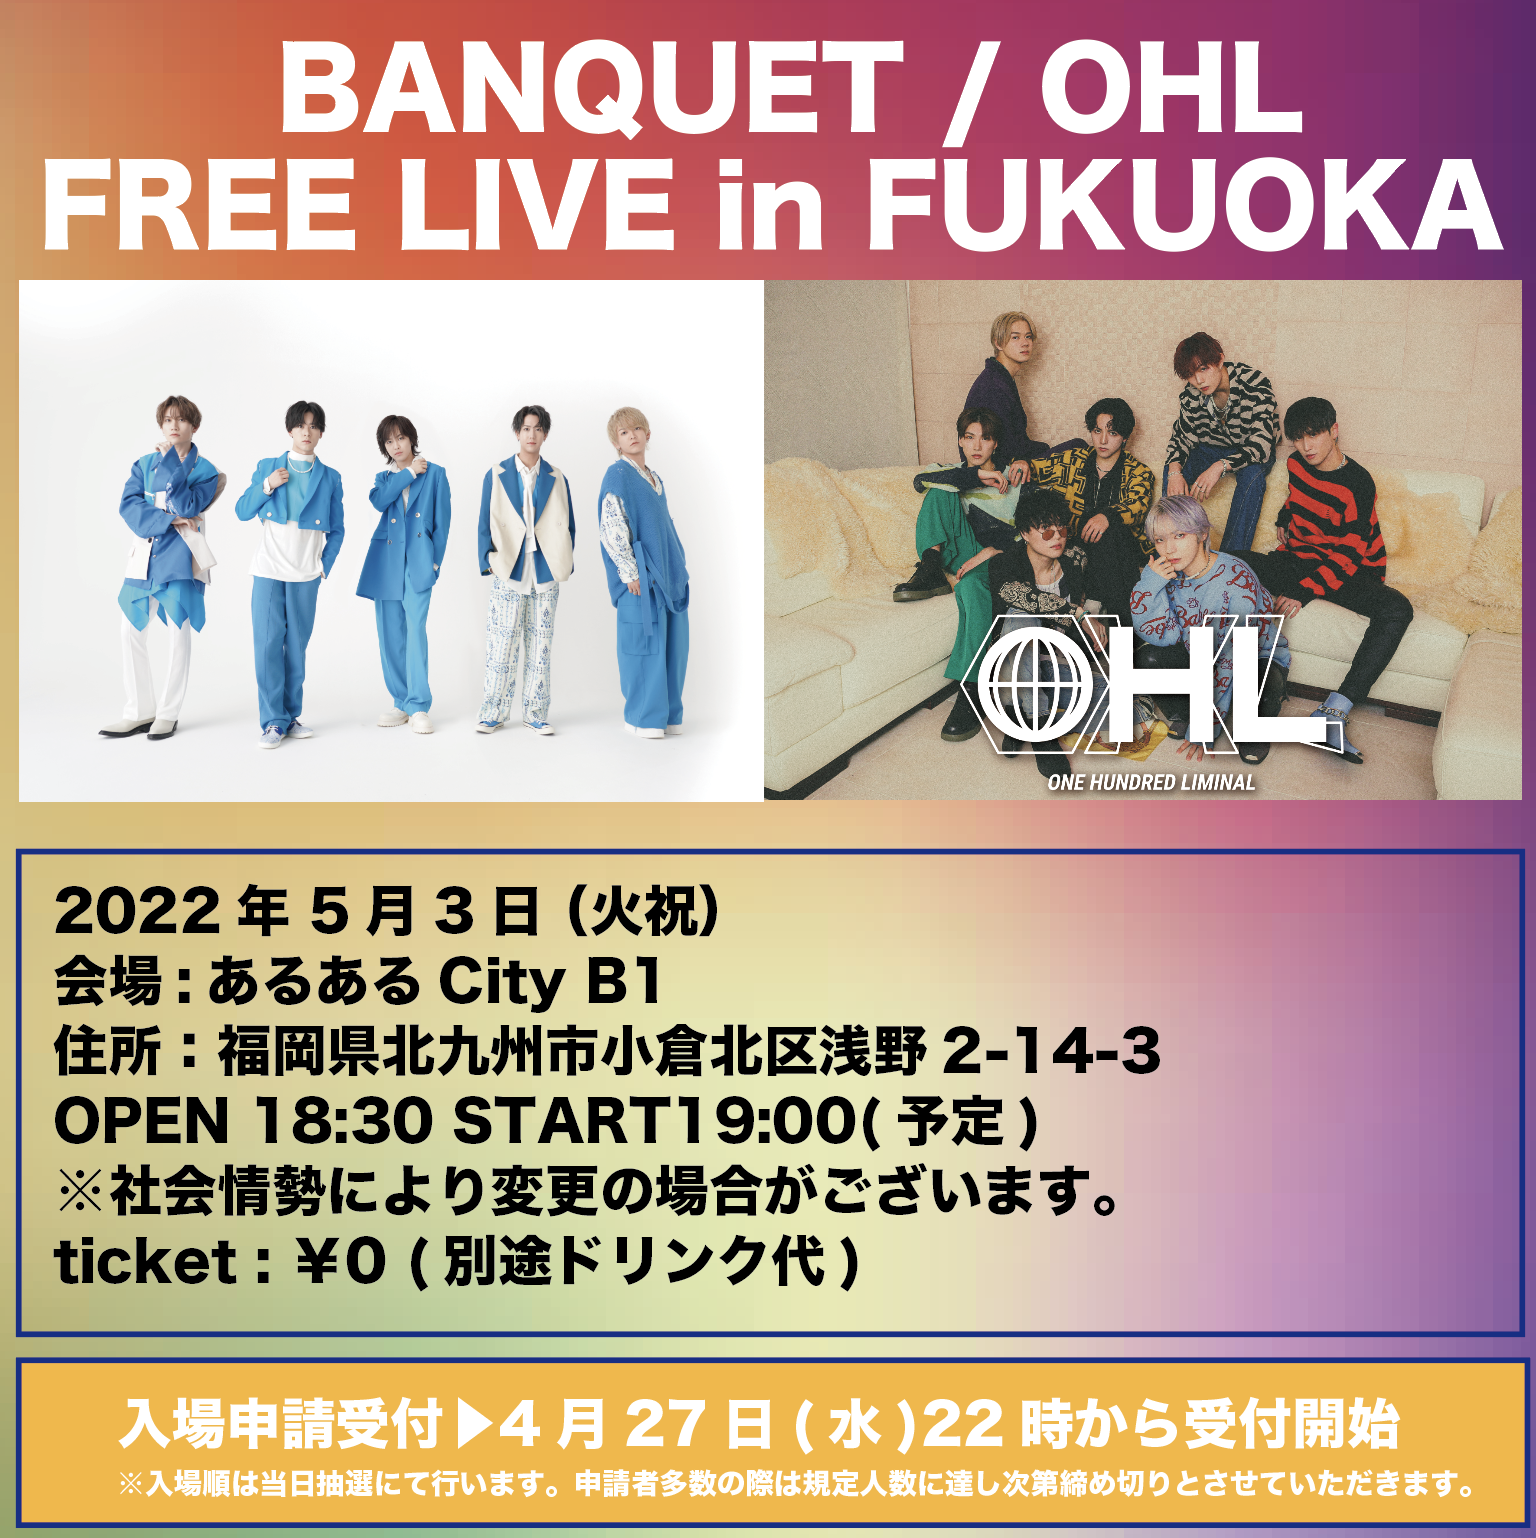 BANQUET OHL FREE LIVE in FUKUOKA